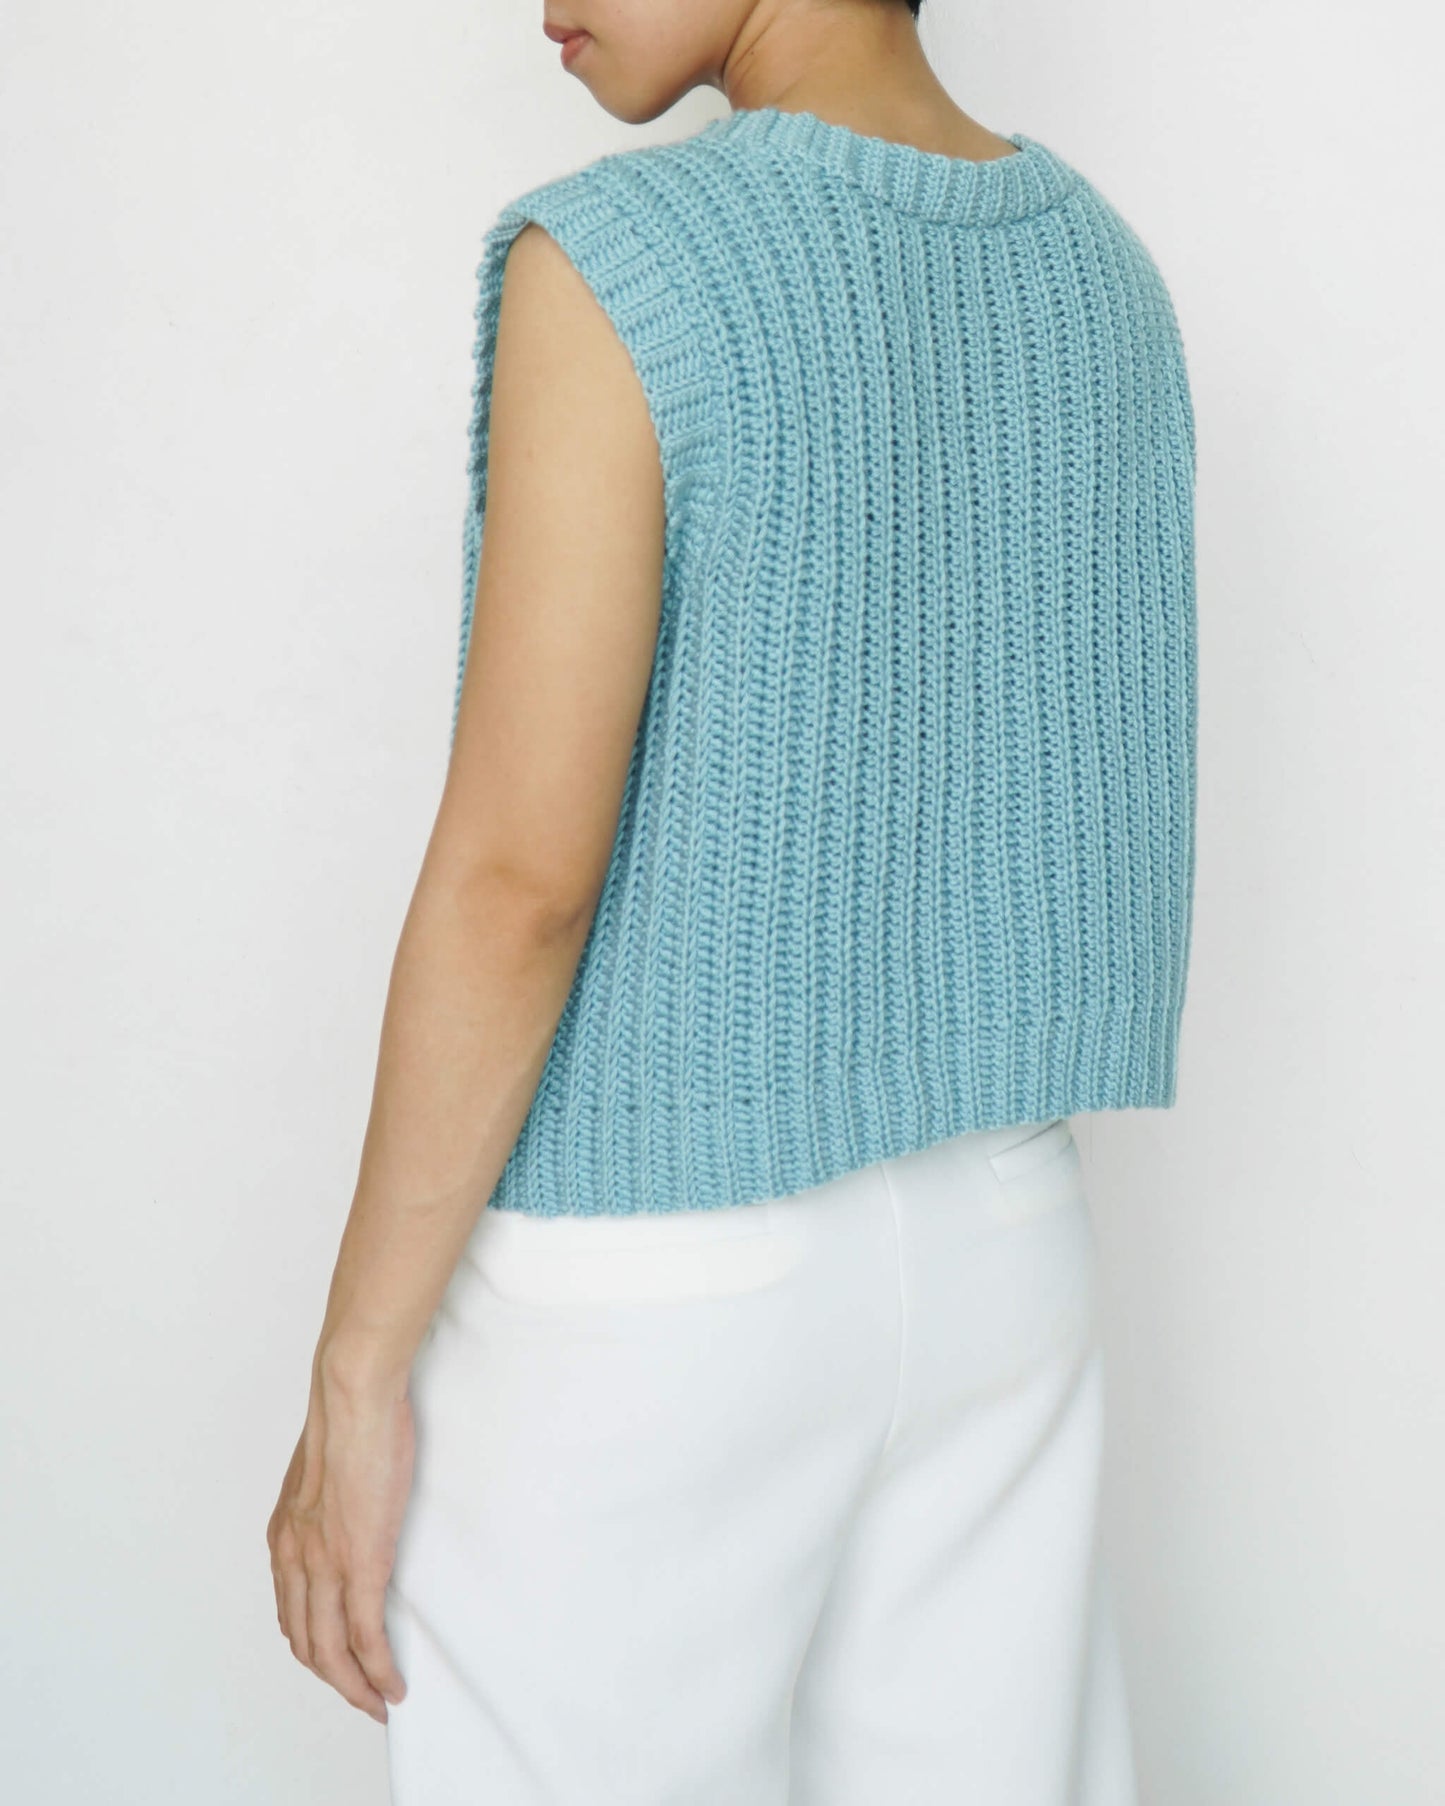 Vest No.31 | Easy crochet pattern